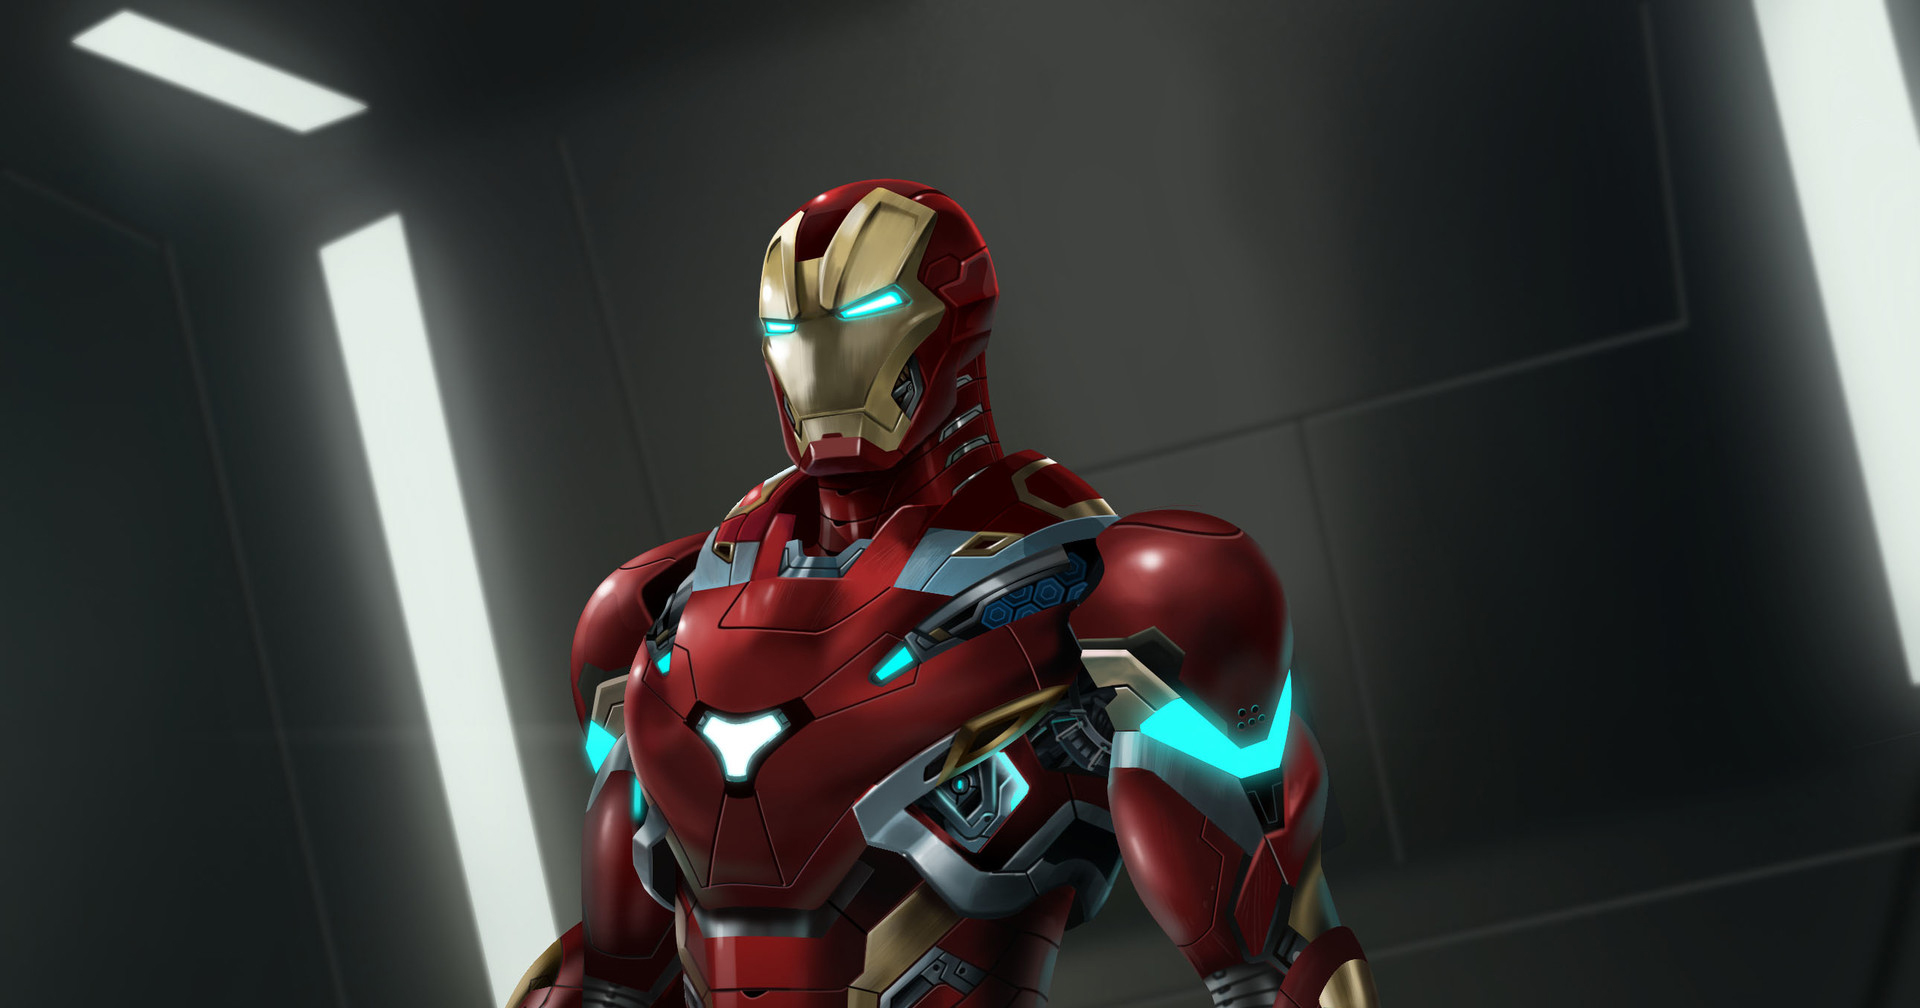  Iron  Man  Suit  Artwork HD  Superheroes 4k Wallpapers  